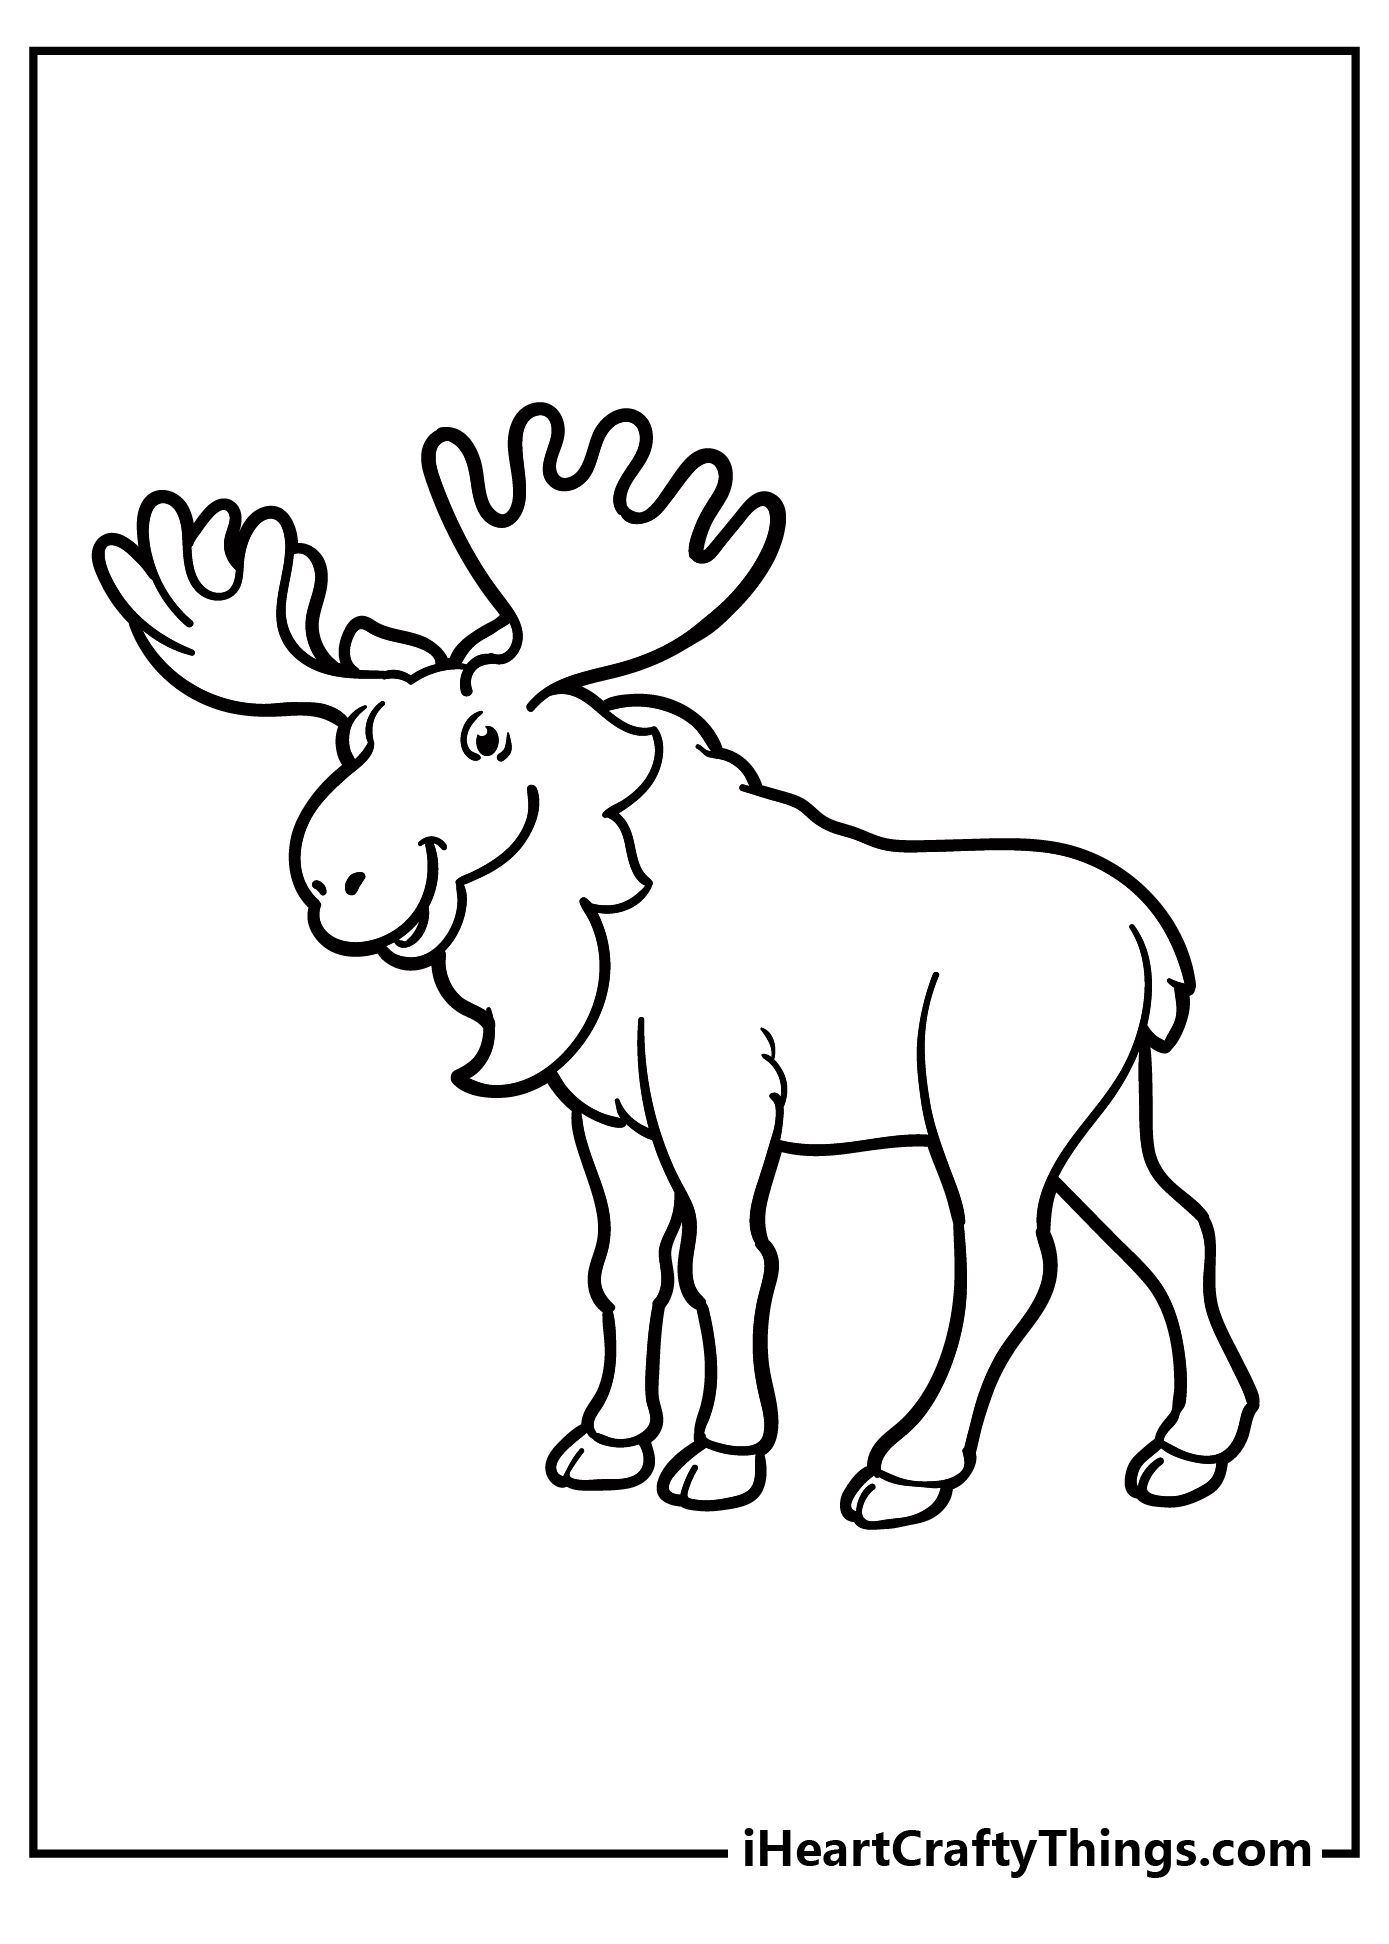 Moose Coloring Pages free pdf download